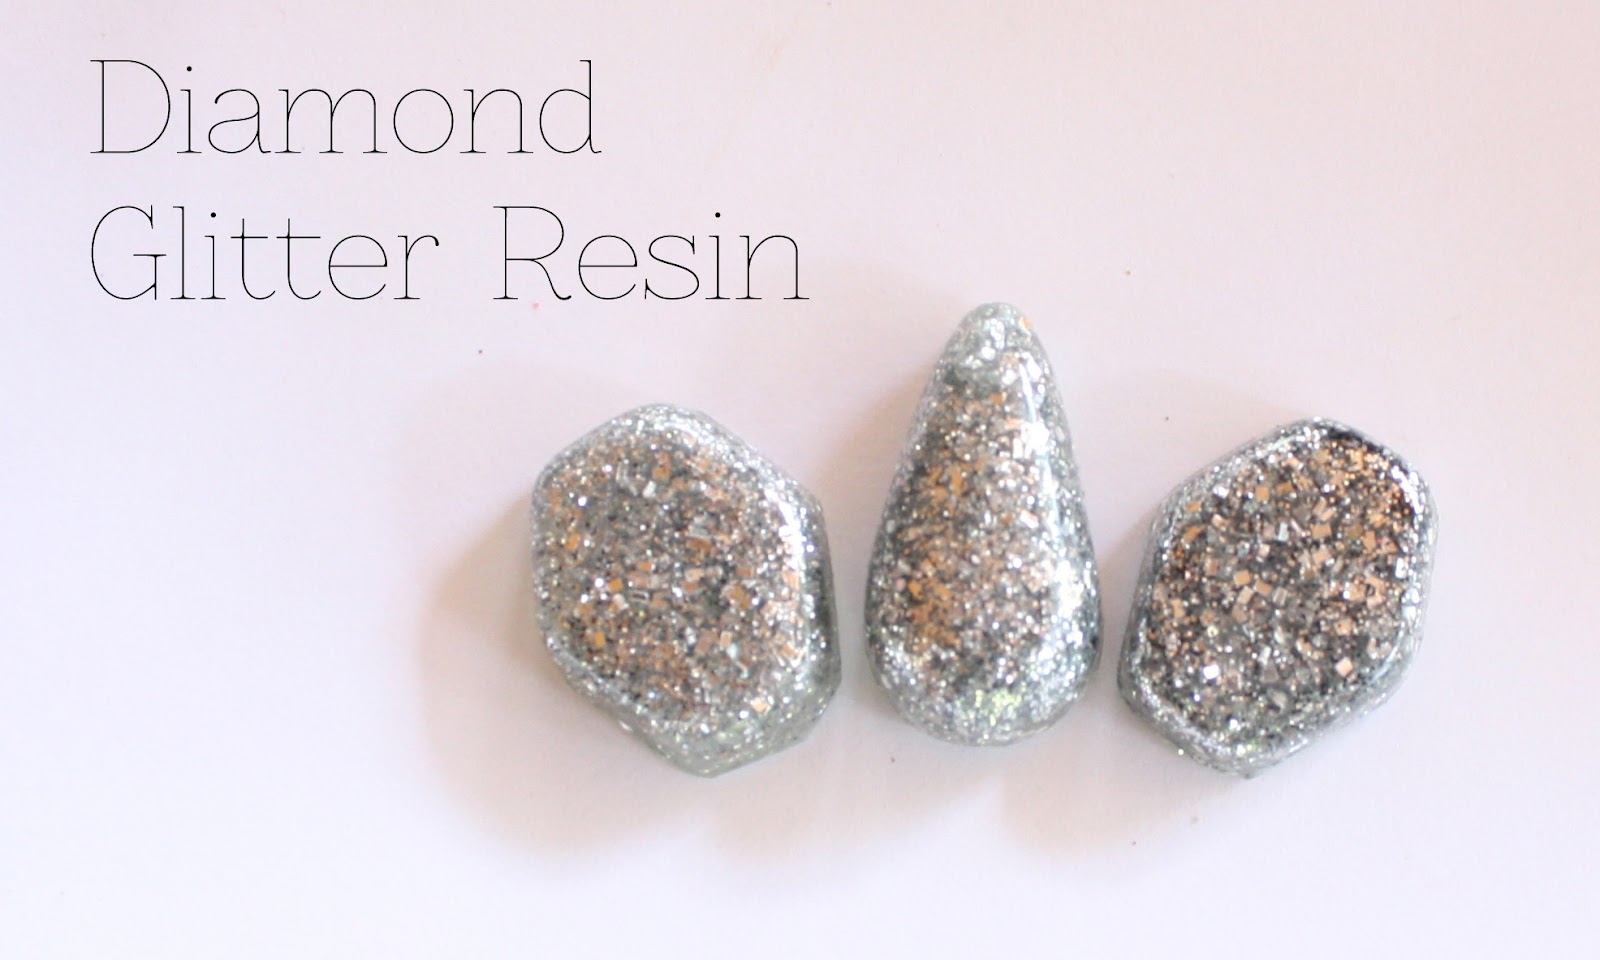 Diamond glitter resin jewelry diy